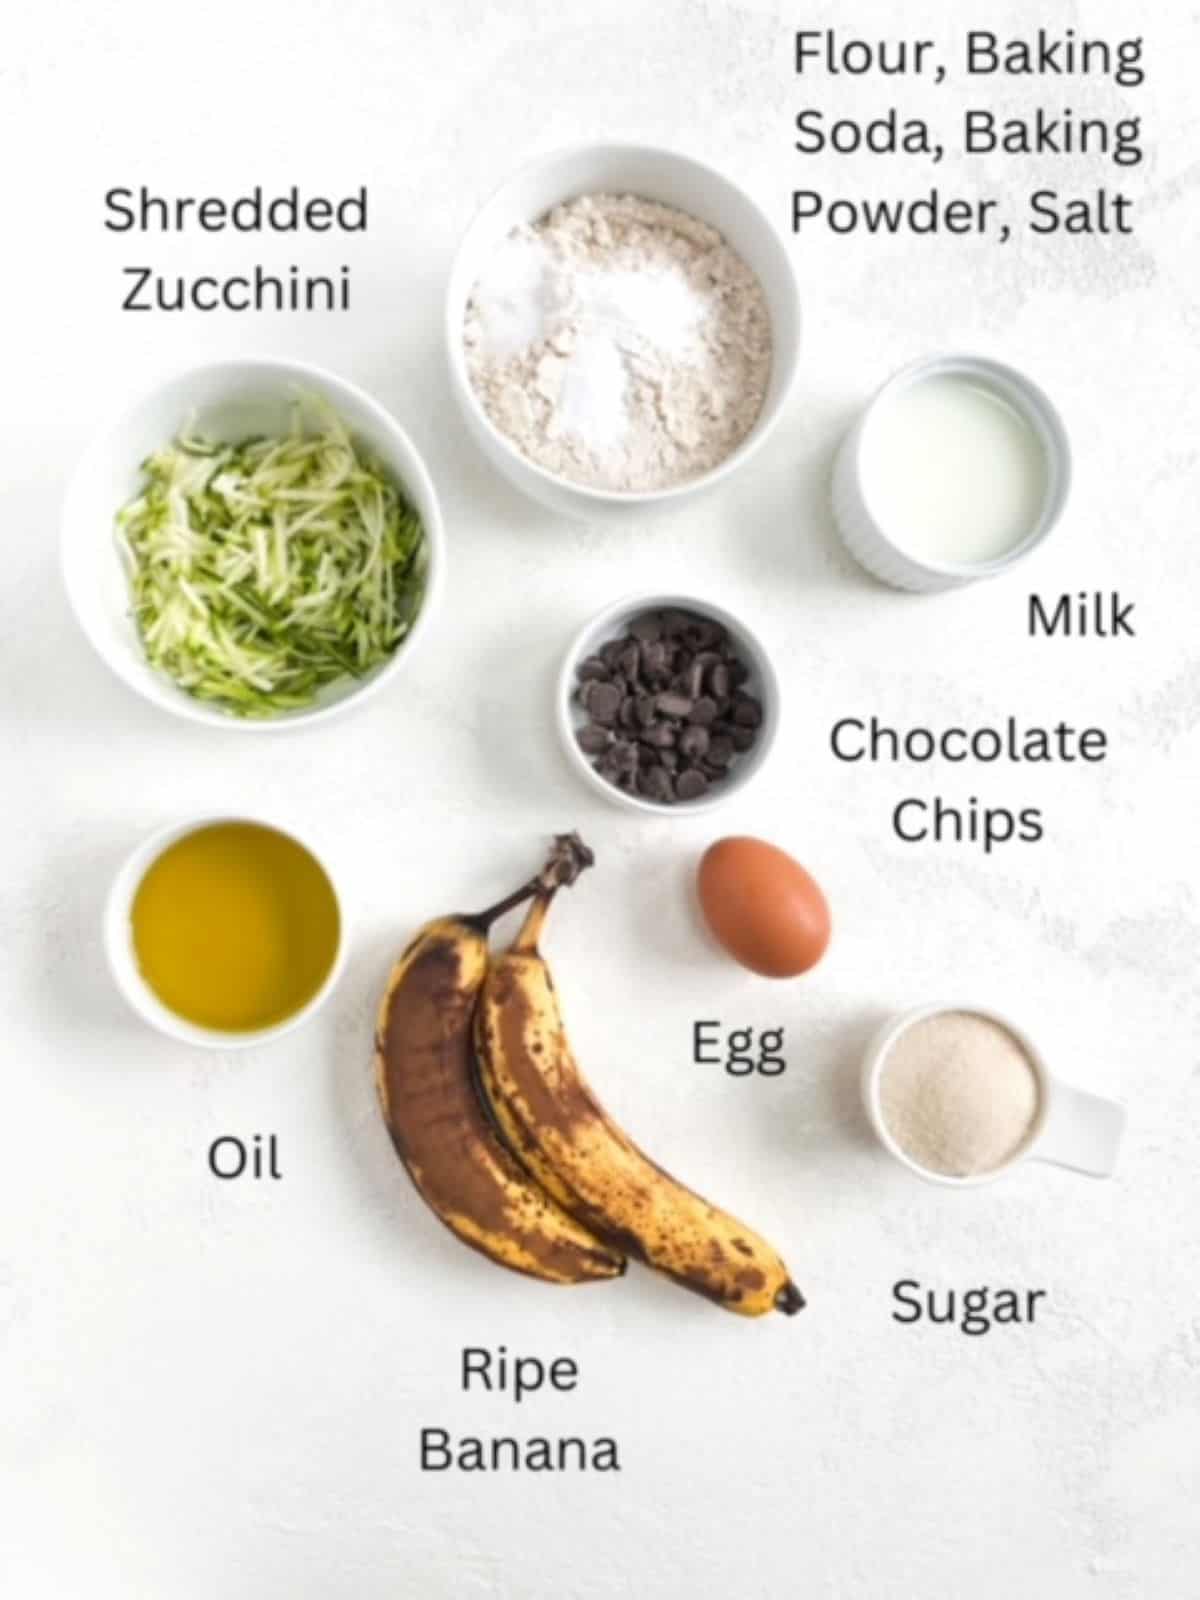 Ingredients to make banana zucchini muffins, labeled.